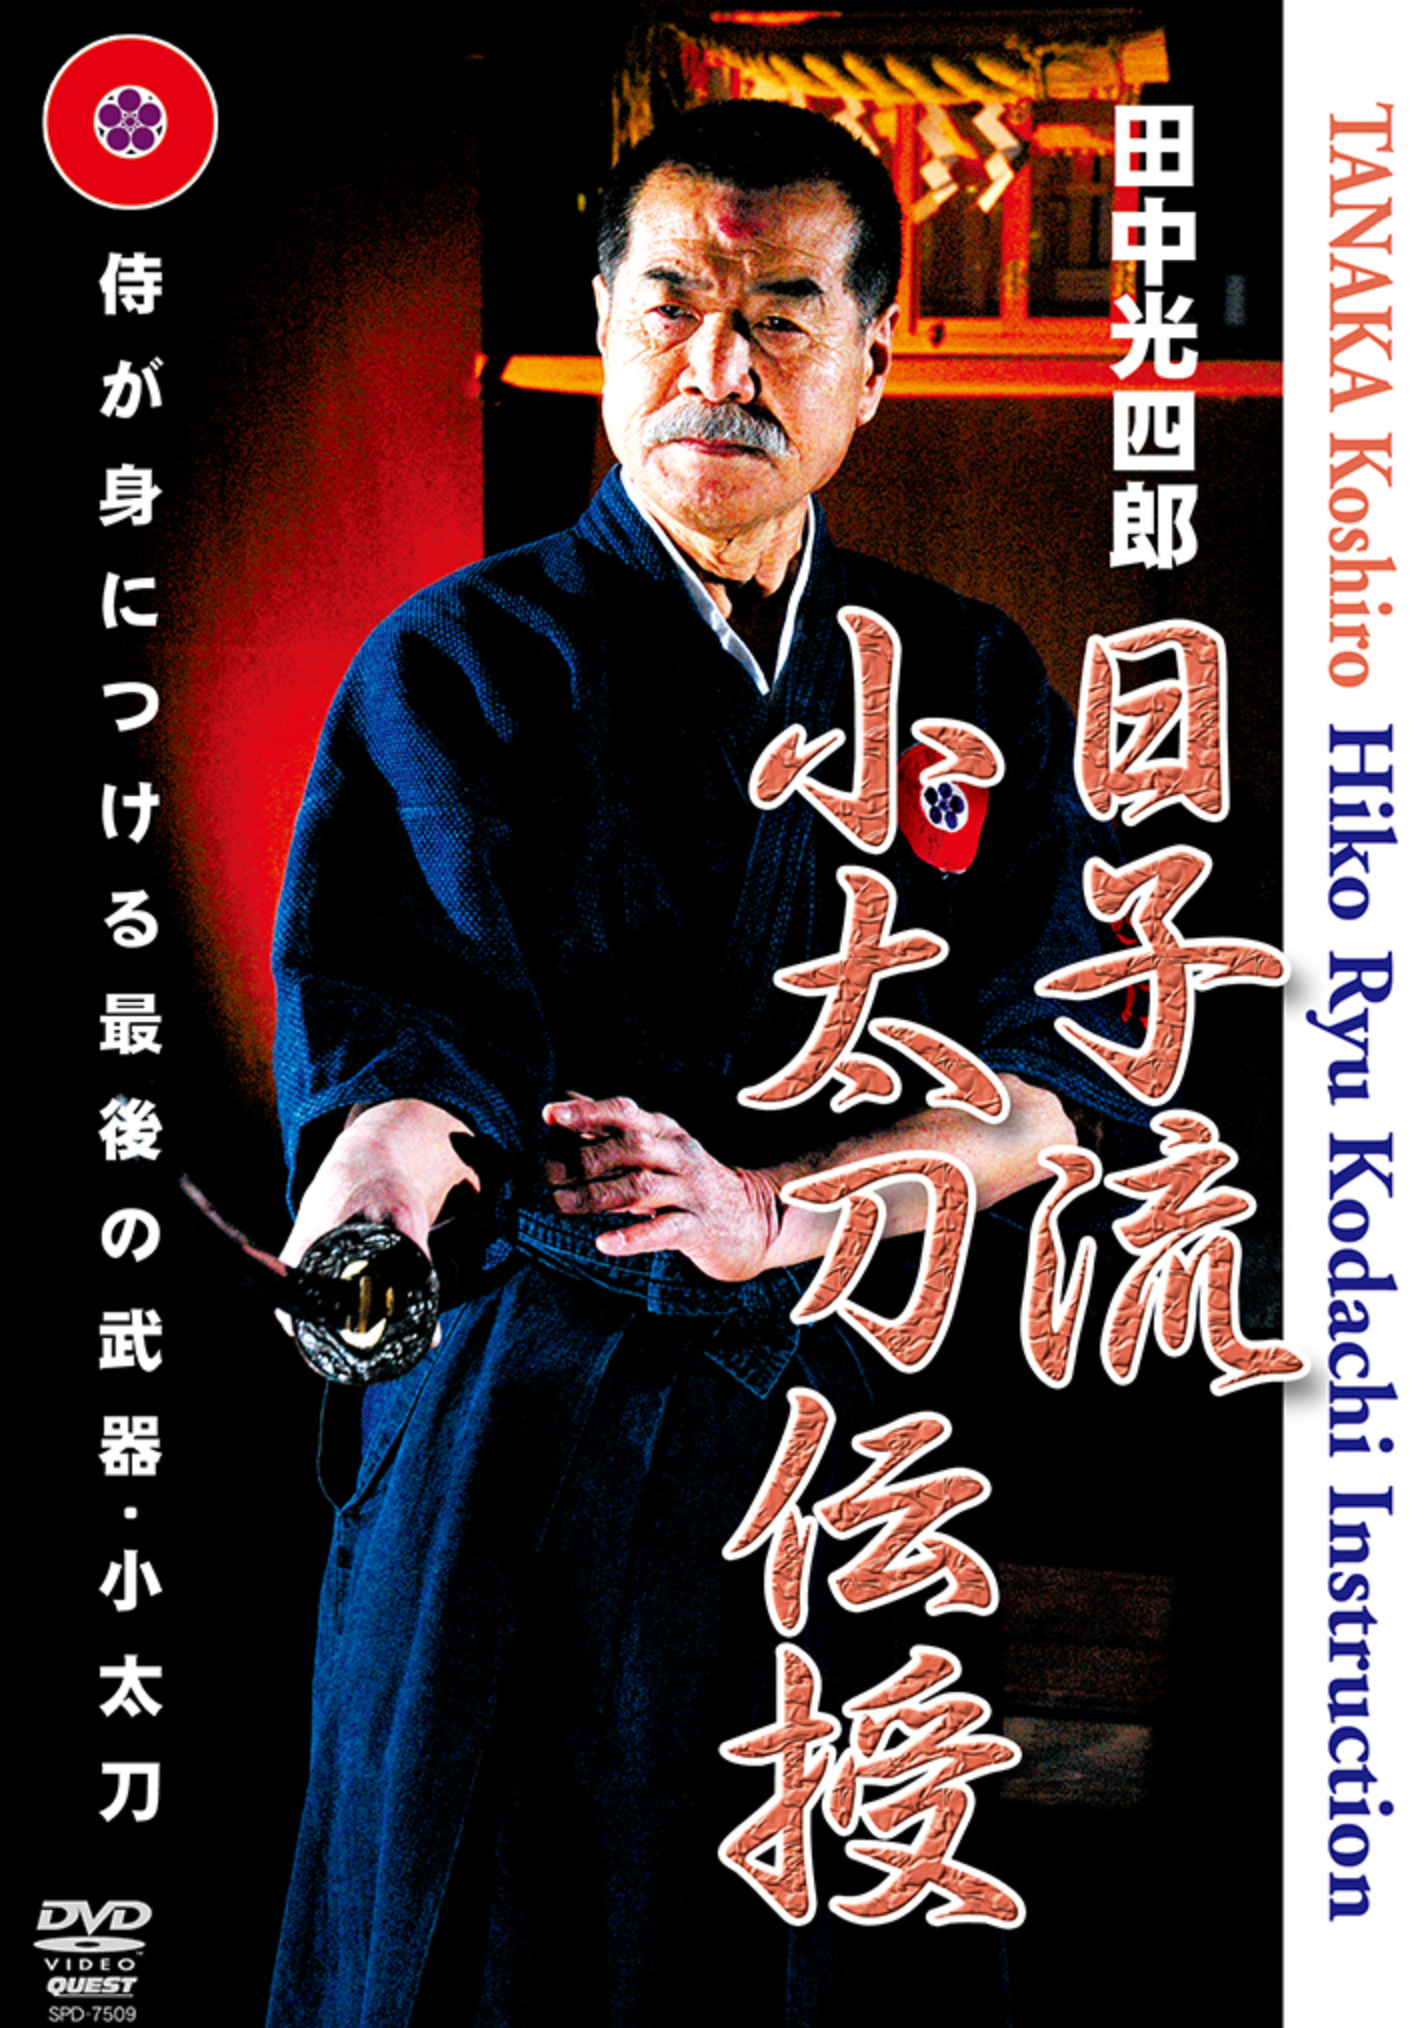 Hiko Ryu Kodachi Instruciton DVD by Koshiro Tanaka - Budovideos Inc